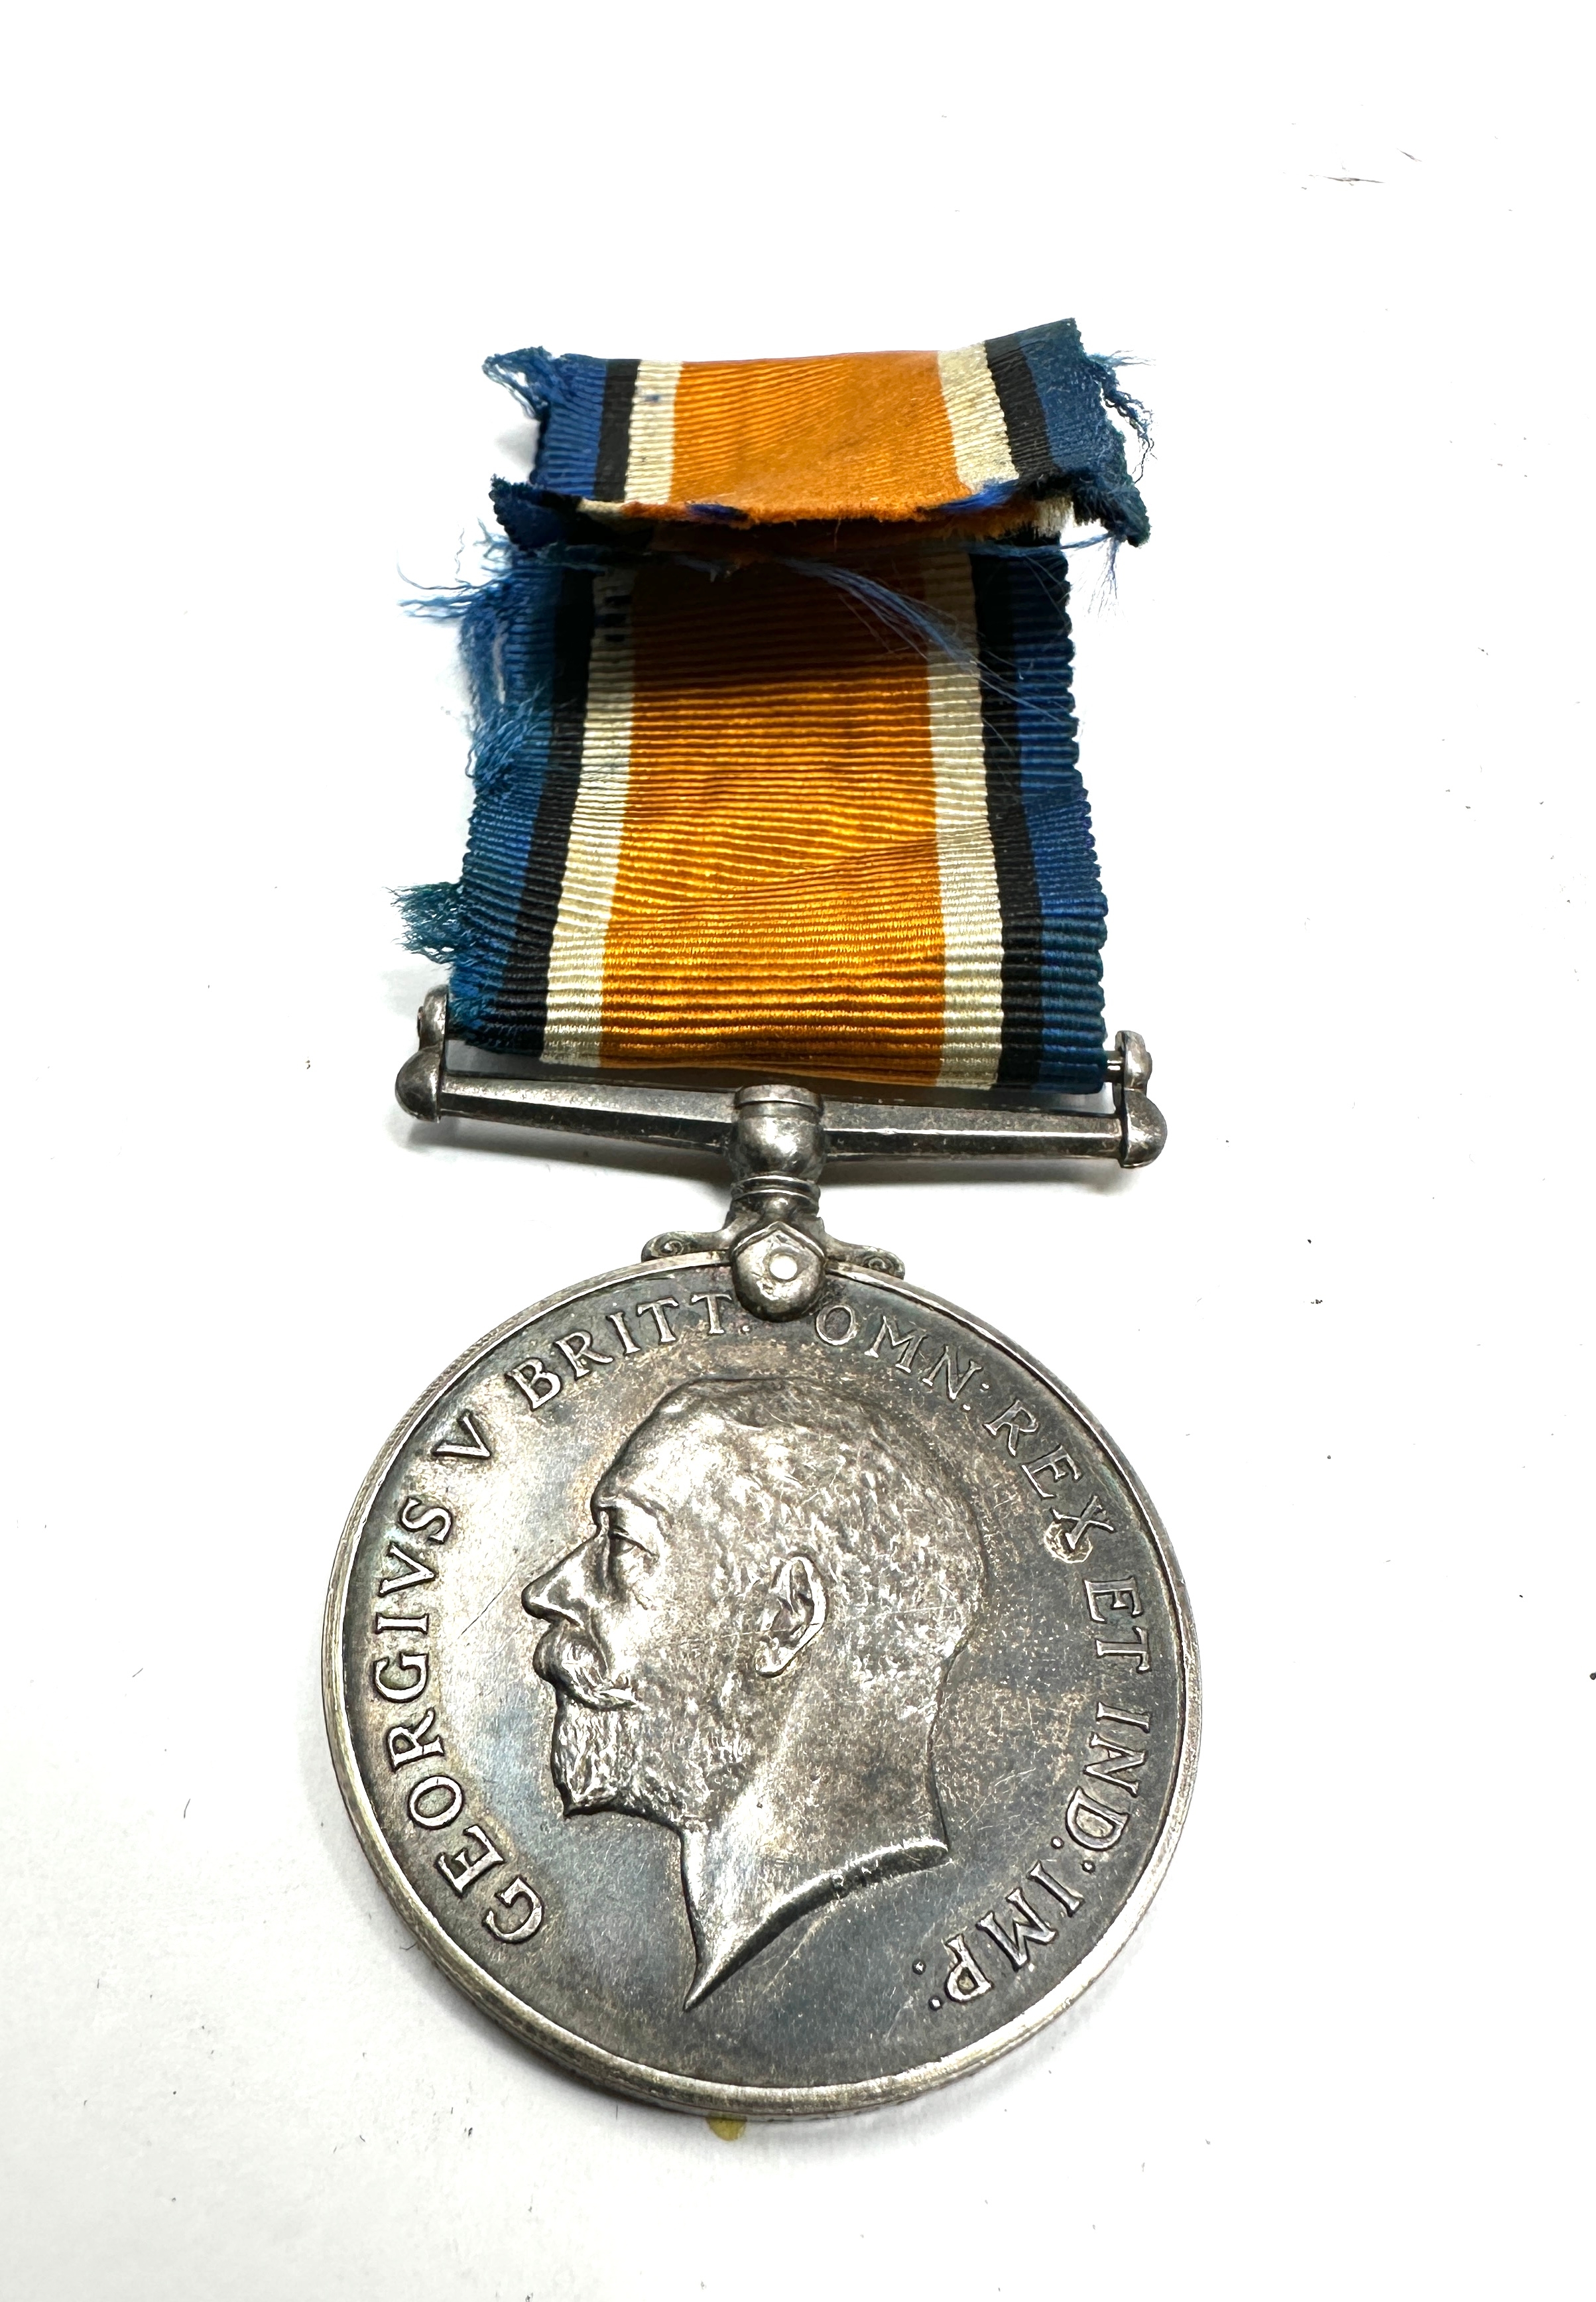 ww1 medal K.I.A 15414 pte j.a.draper somerset light infantry